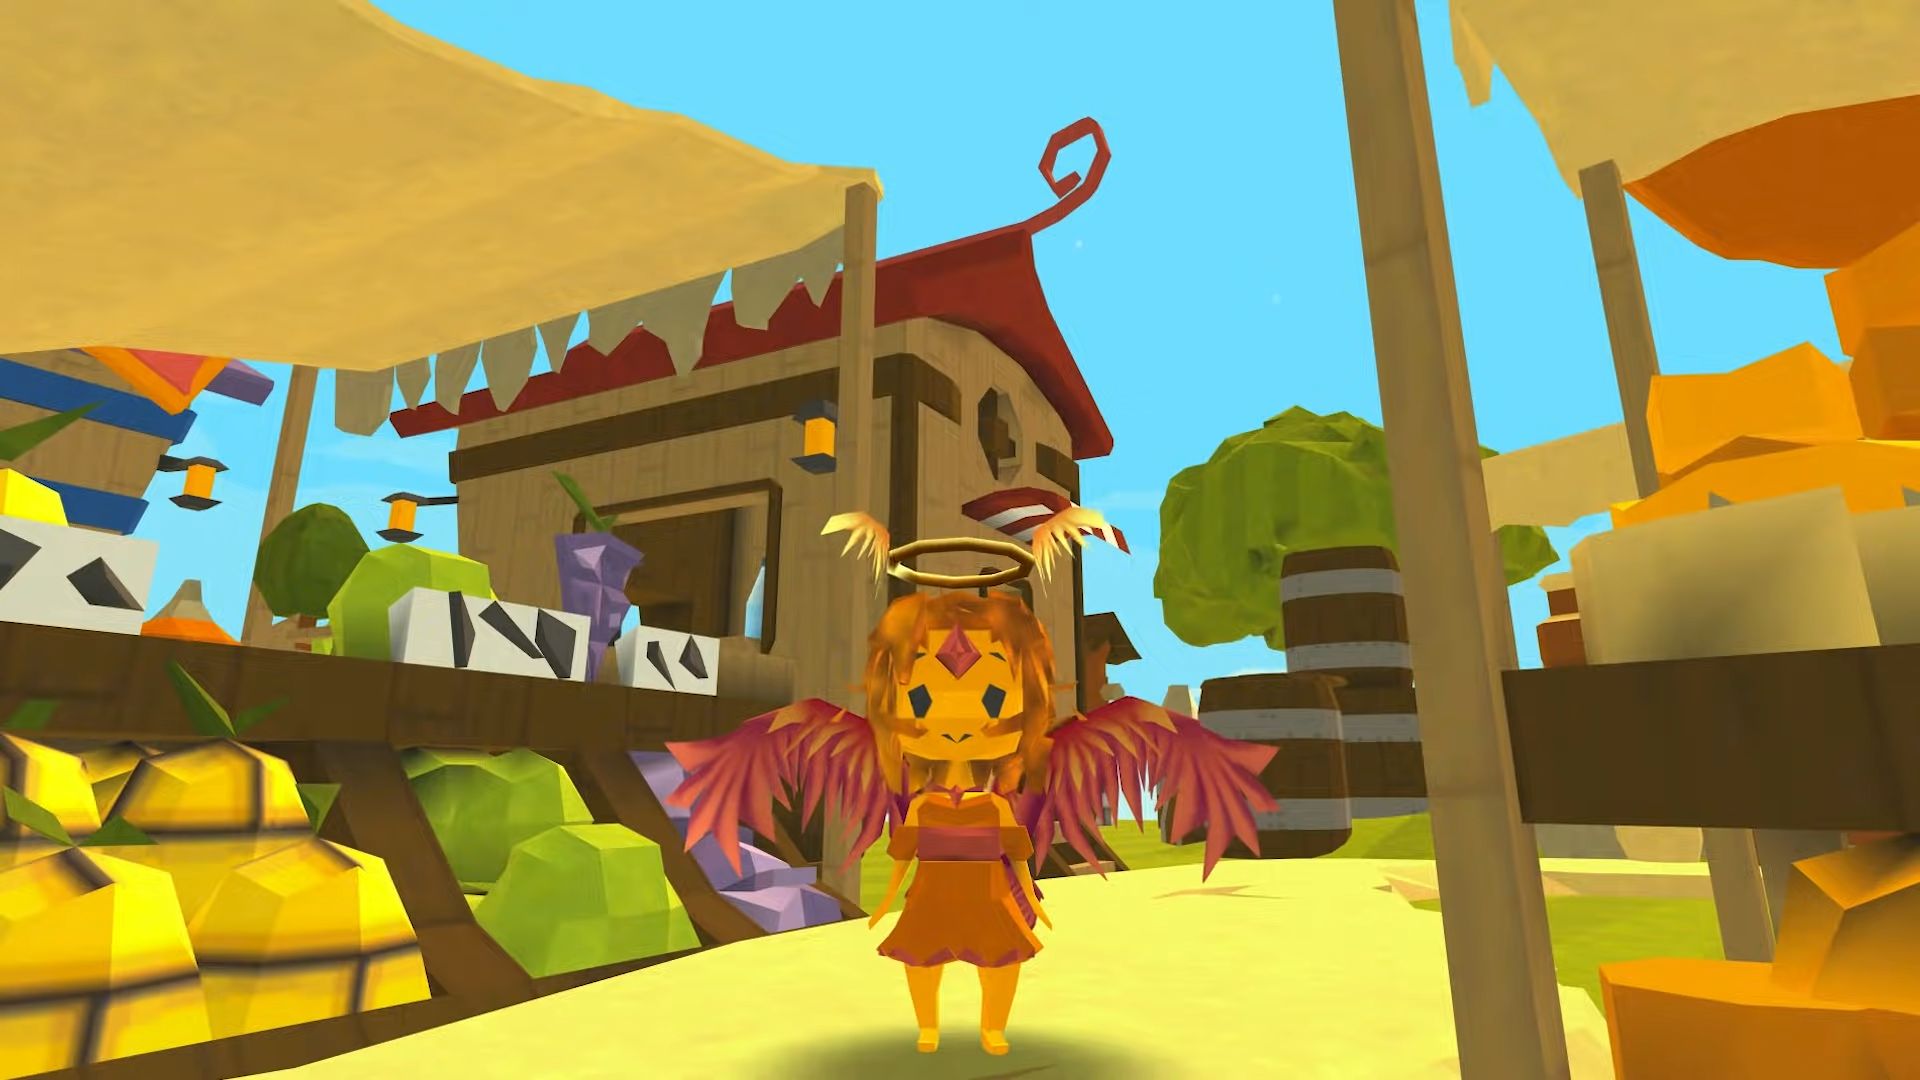 Kogama Friends - Android game screenshots.